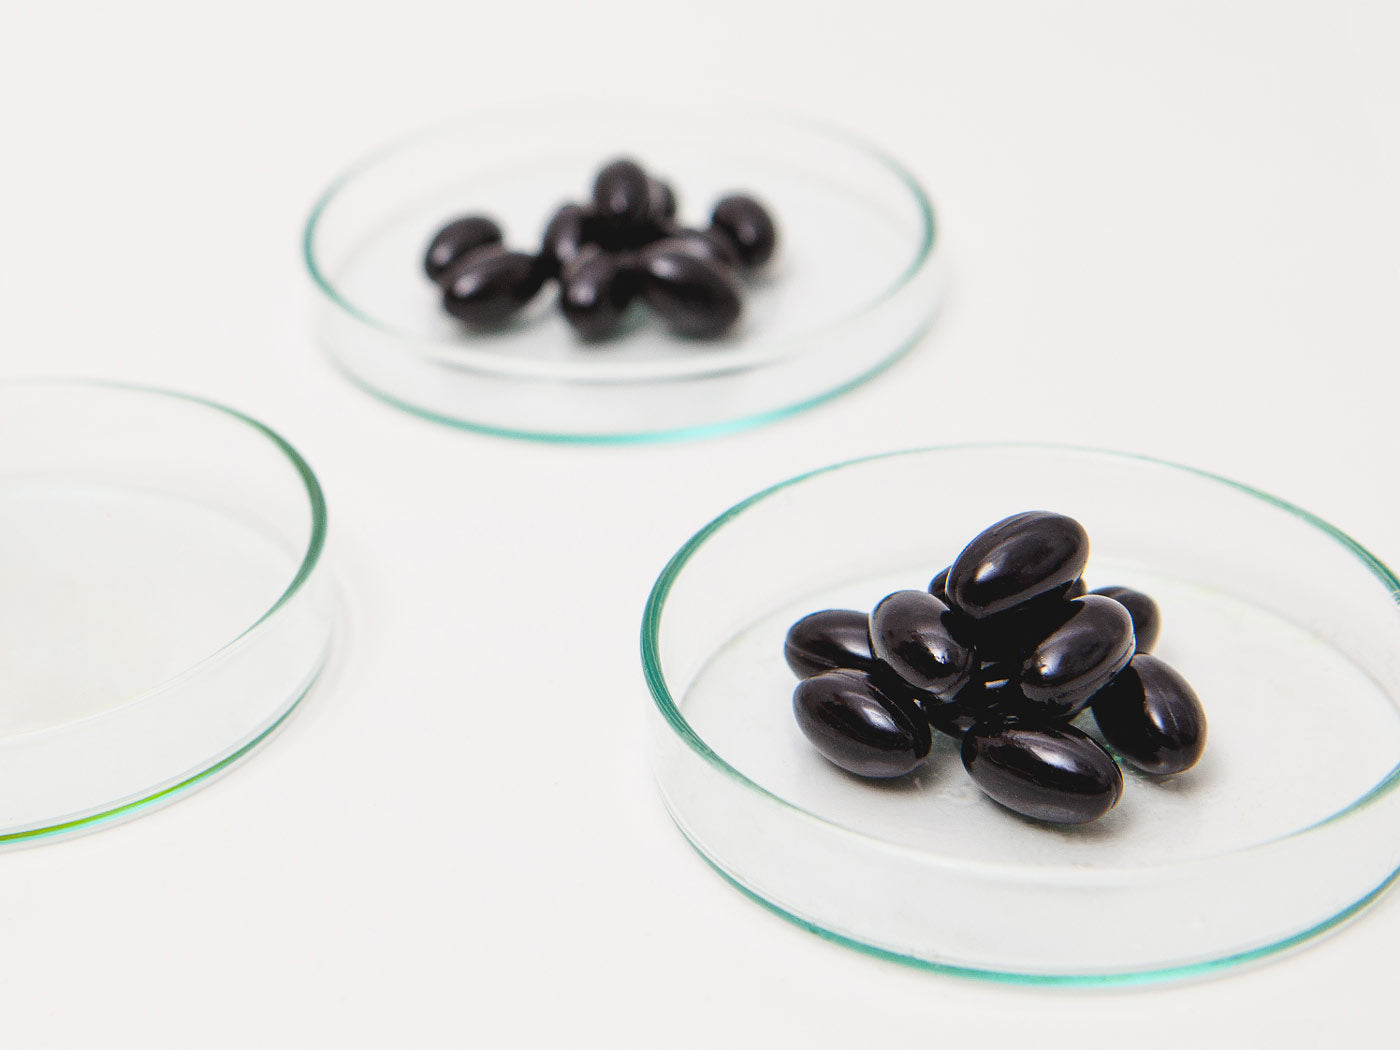 CBD capsules lie in glass bowls.